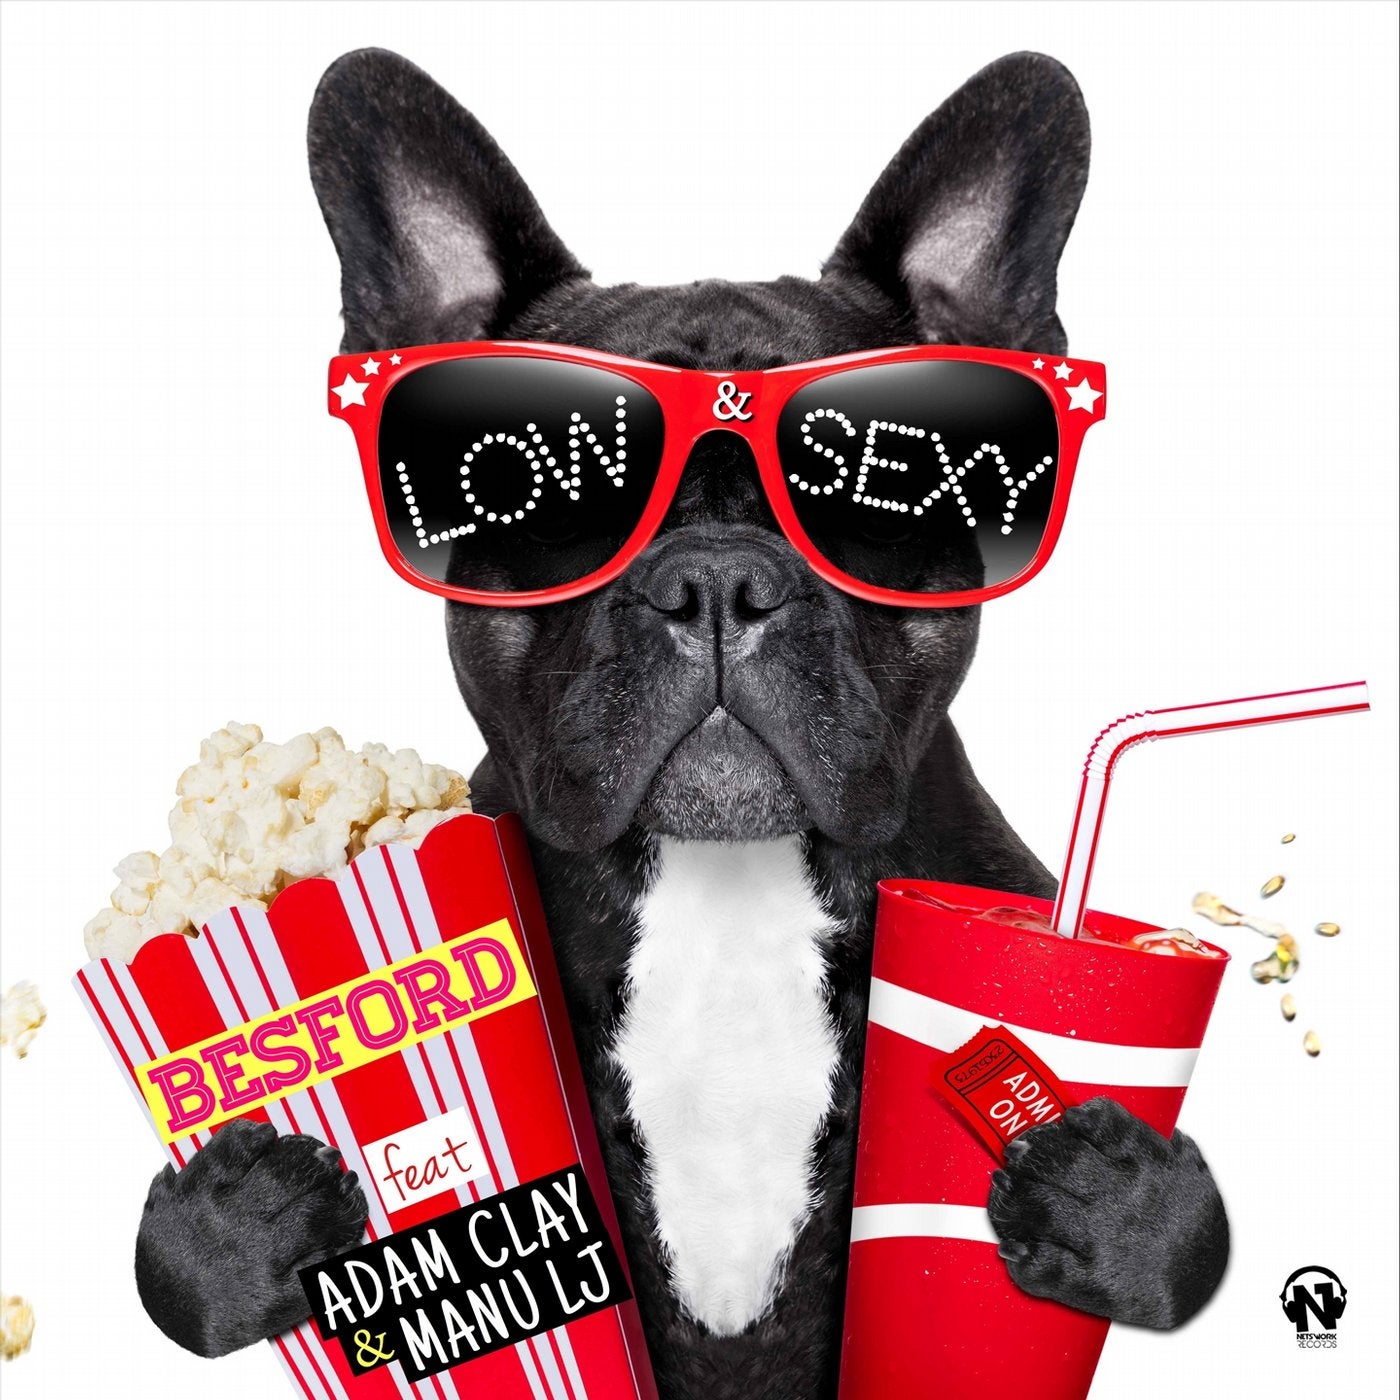 Low & Sexy (feat. Adam Clay, Manu LJ)